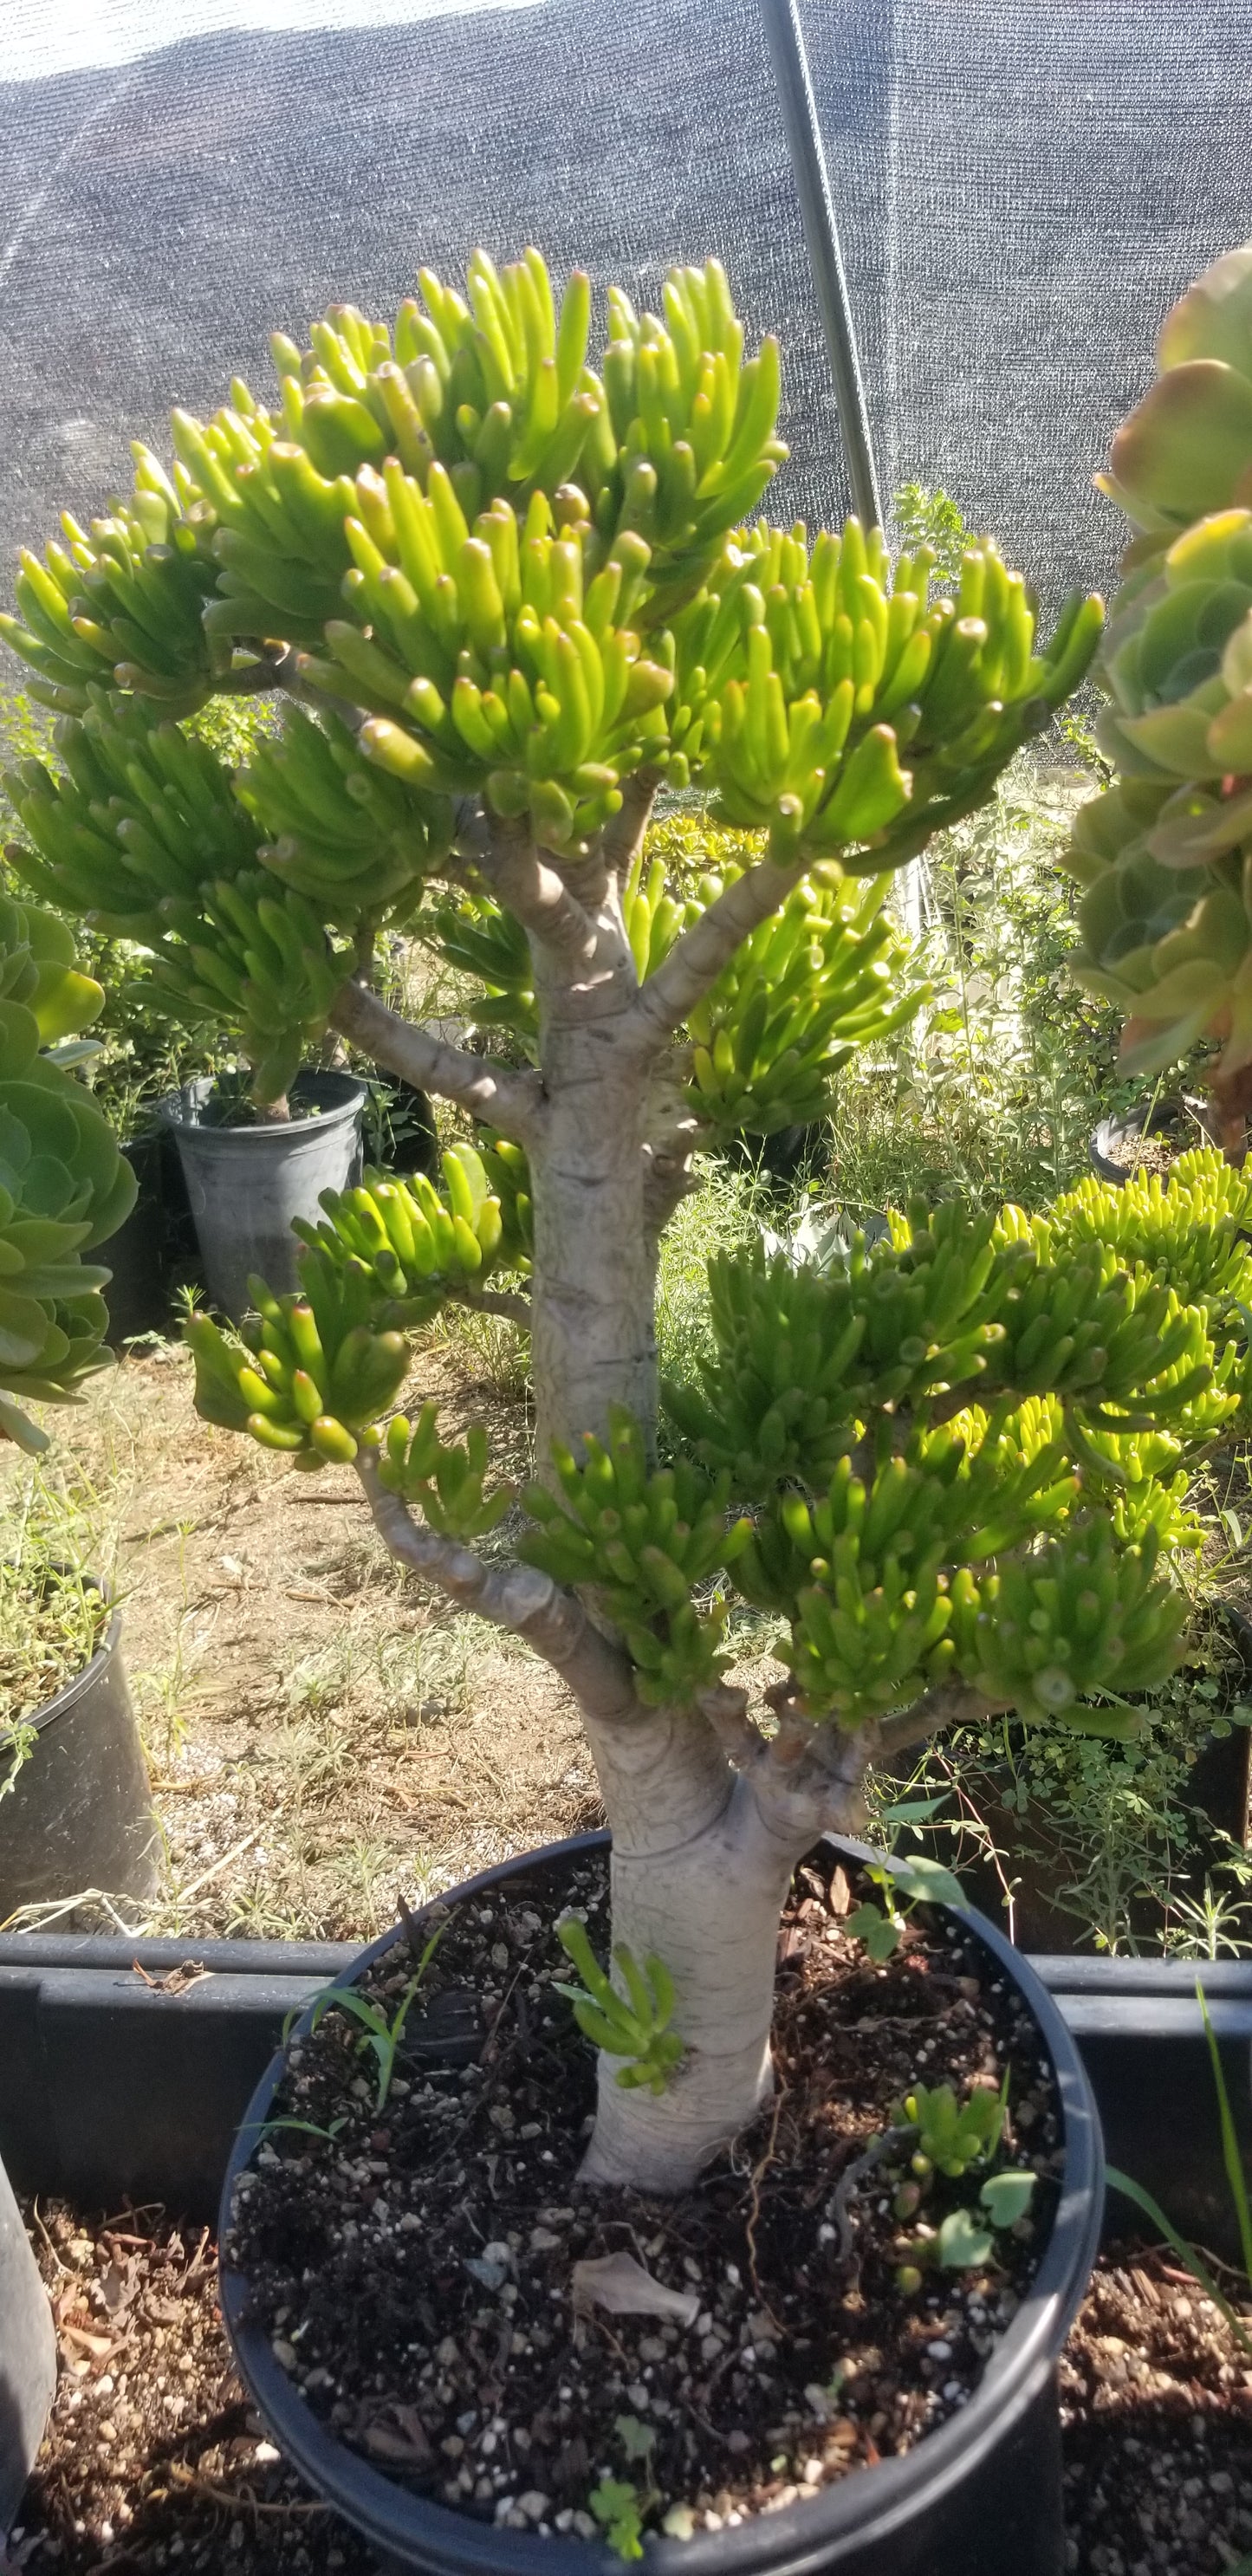 Crassula Ovata Gollum Tree